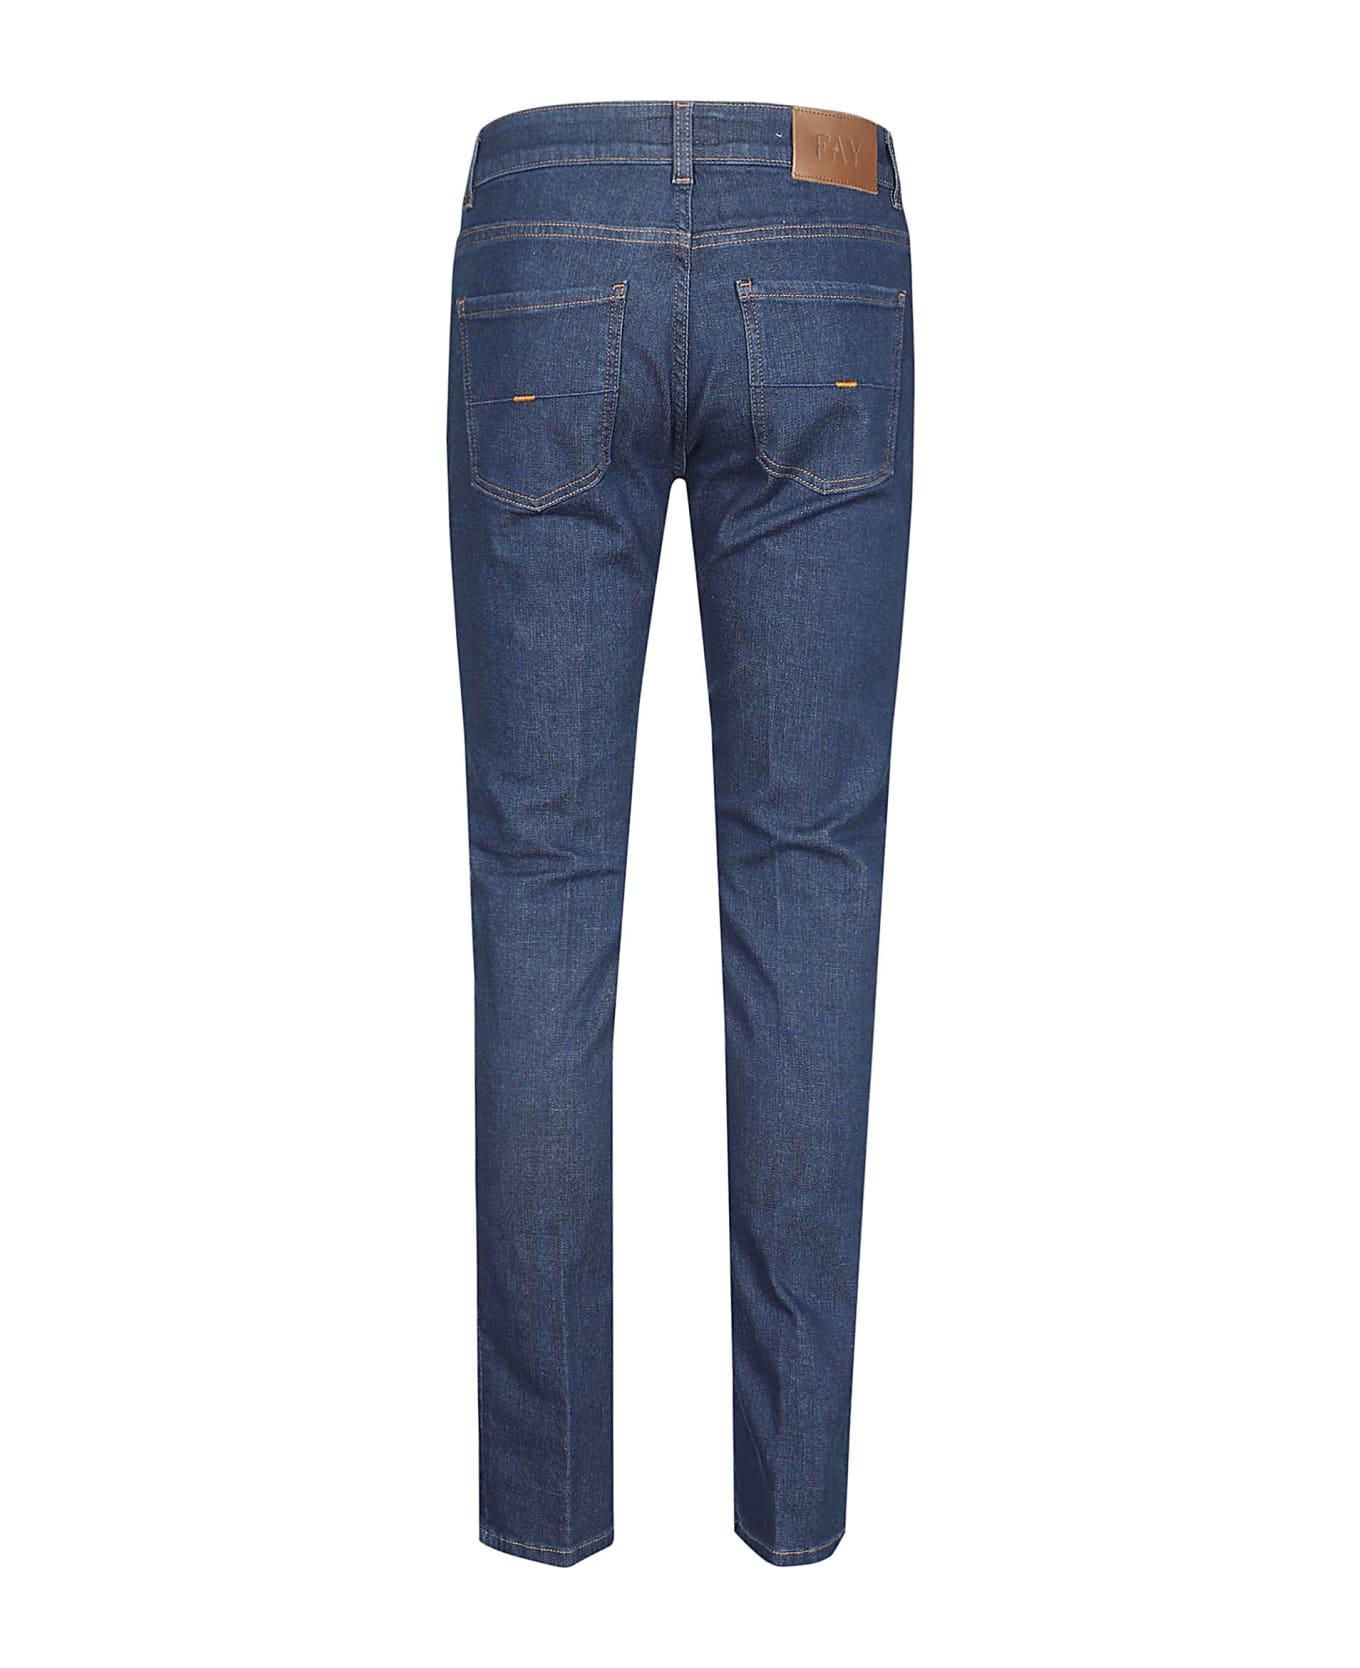 Fay Original Jeans - Blu Denim